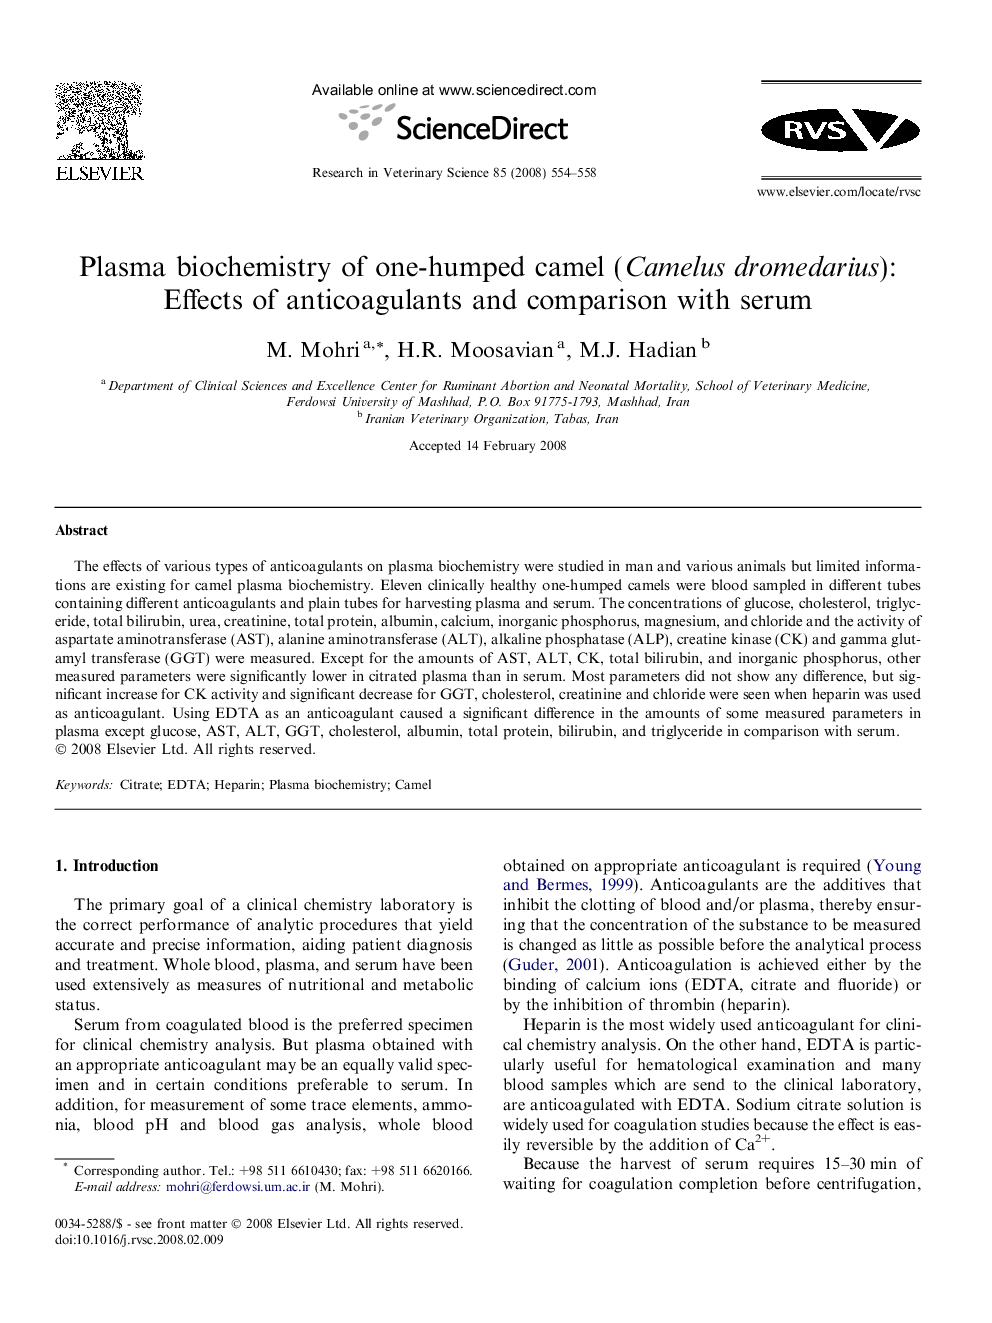 Plasma biochemistry of one-humped camel (Camelus dromedarius): Effects of anticoagulants and comparison with serum